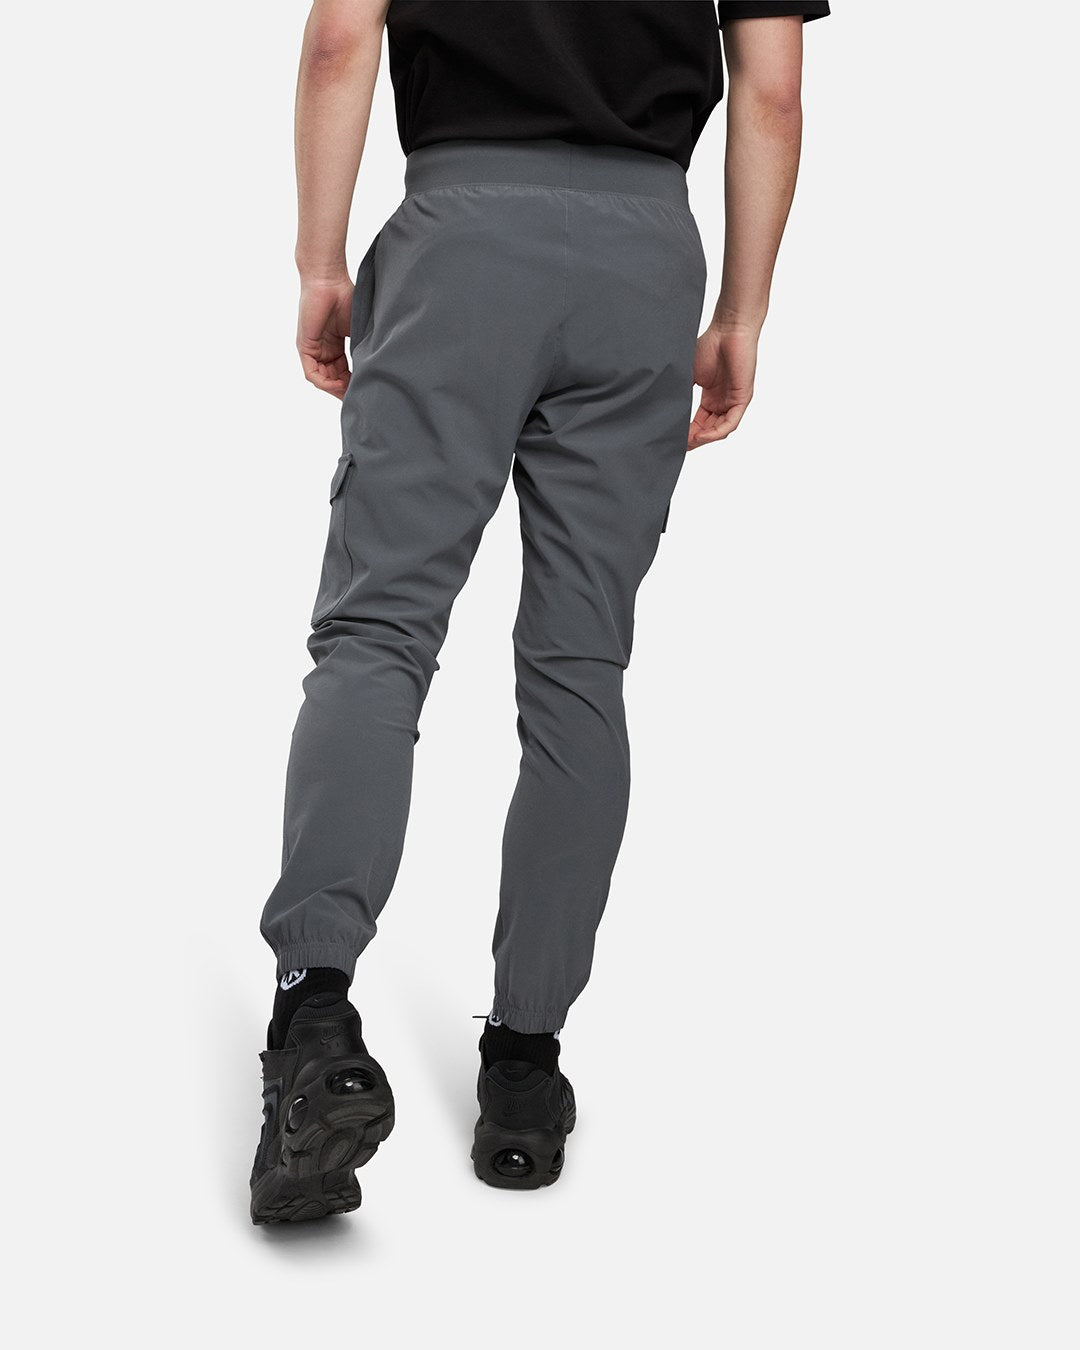 Under Armor Stretch Woven Pants - Grey/Black